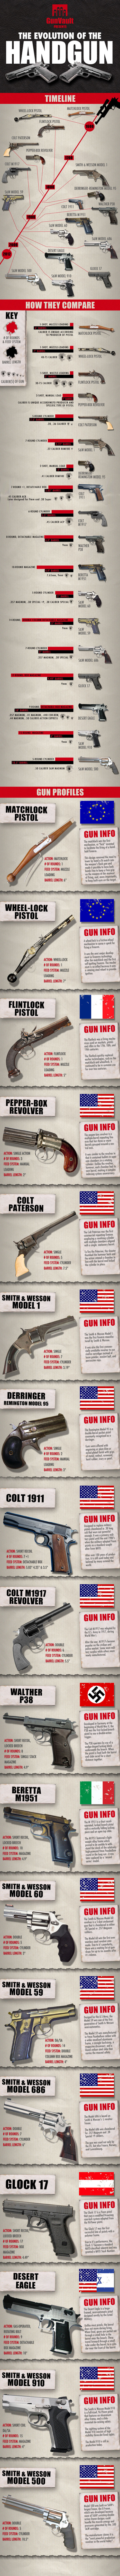 The Evolution of the Handgun infographic